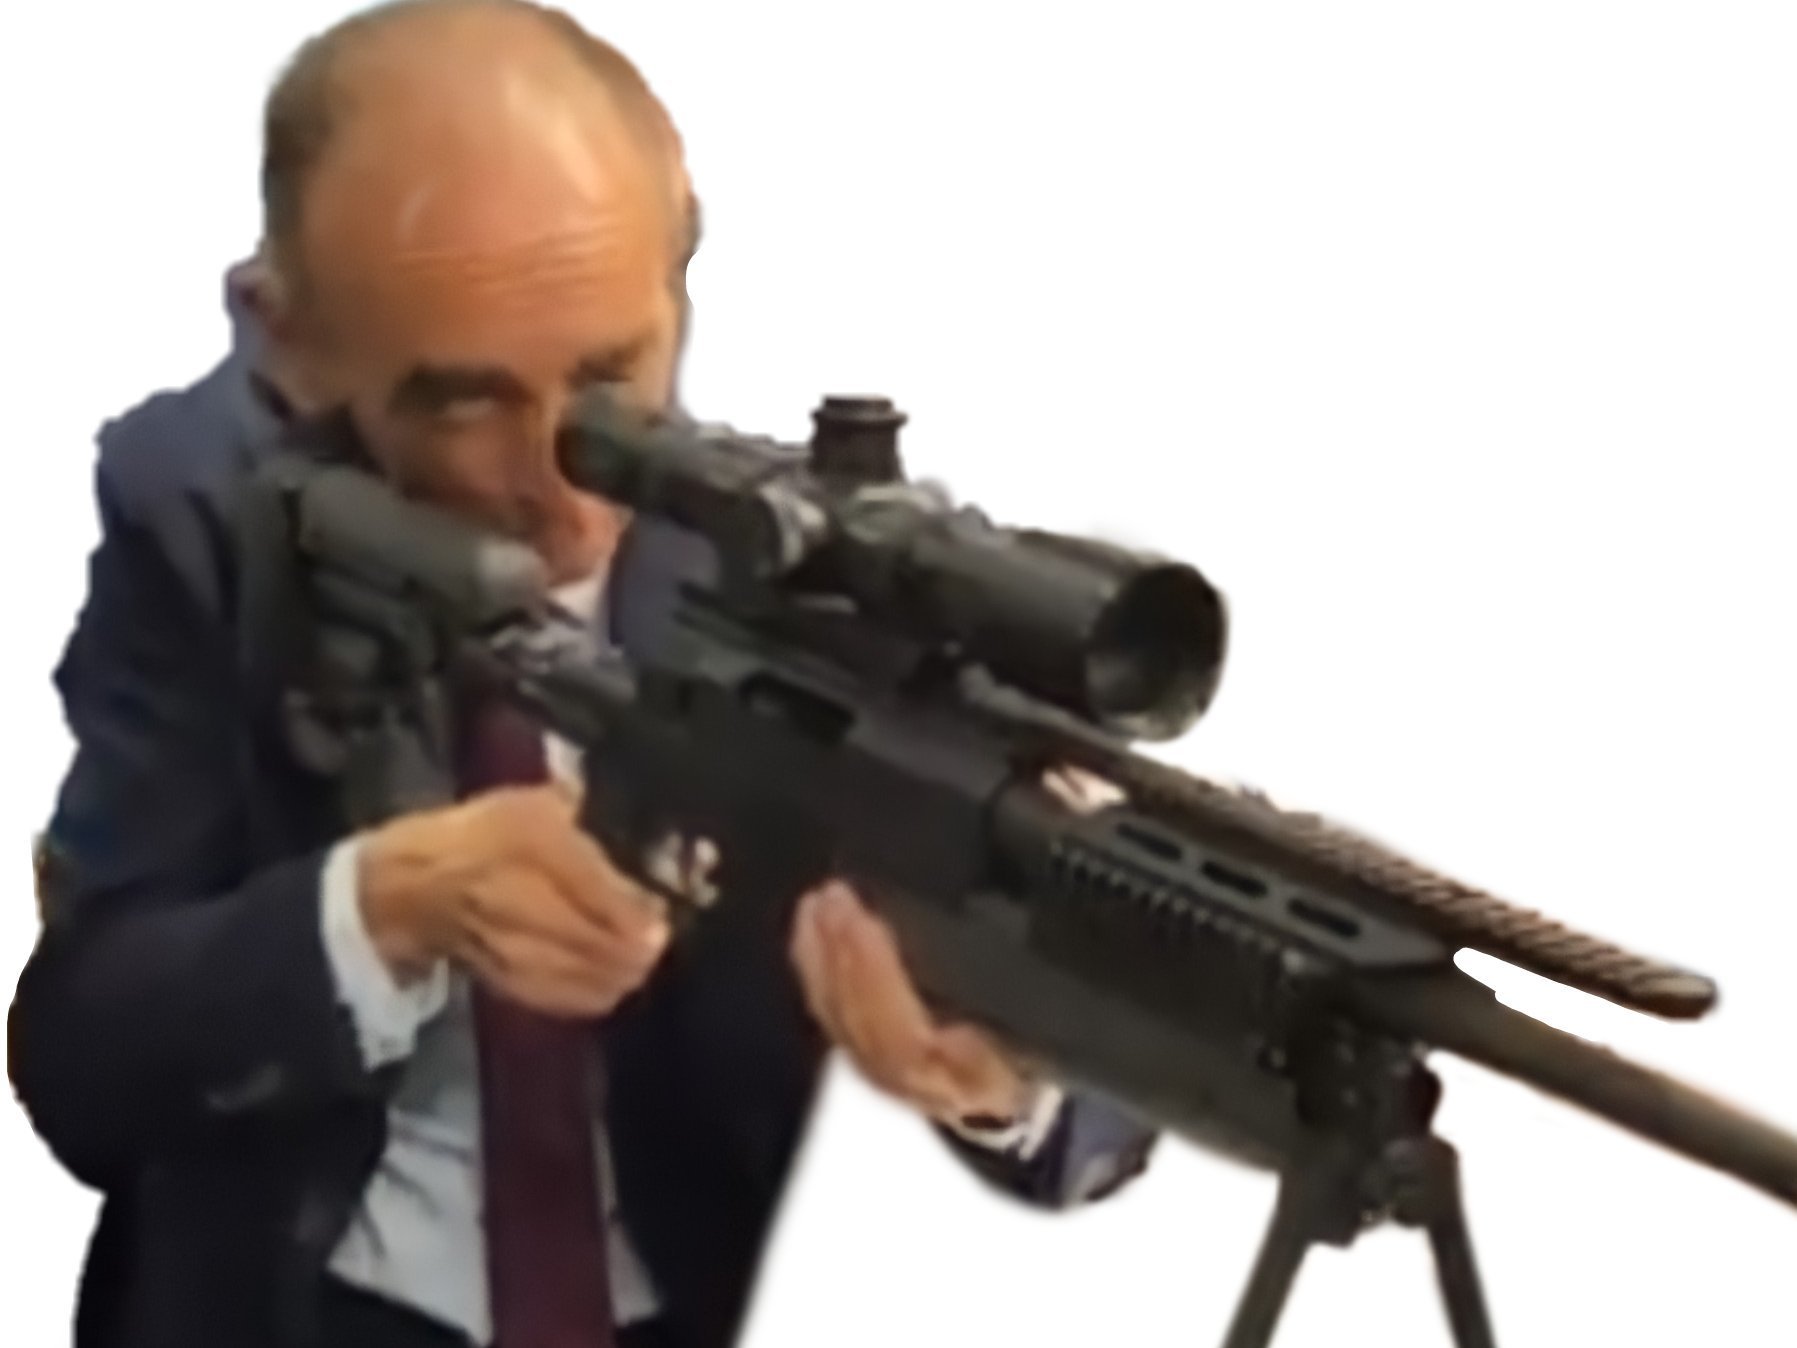 2022 sniper eric journaliste president z0zz fusil soldat guerre zemmour politic arme